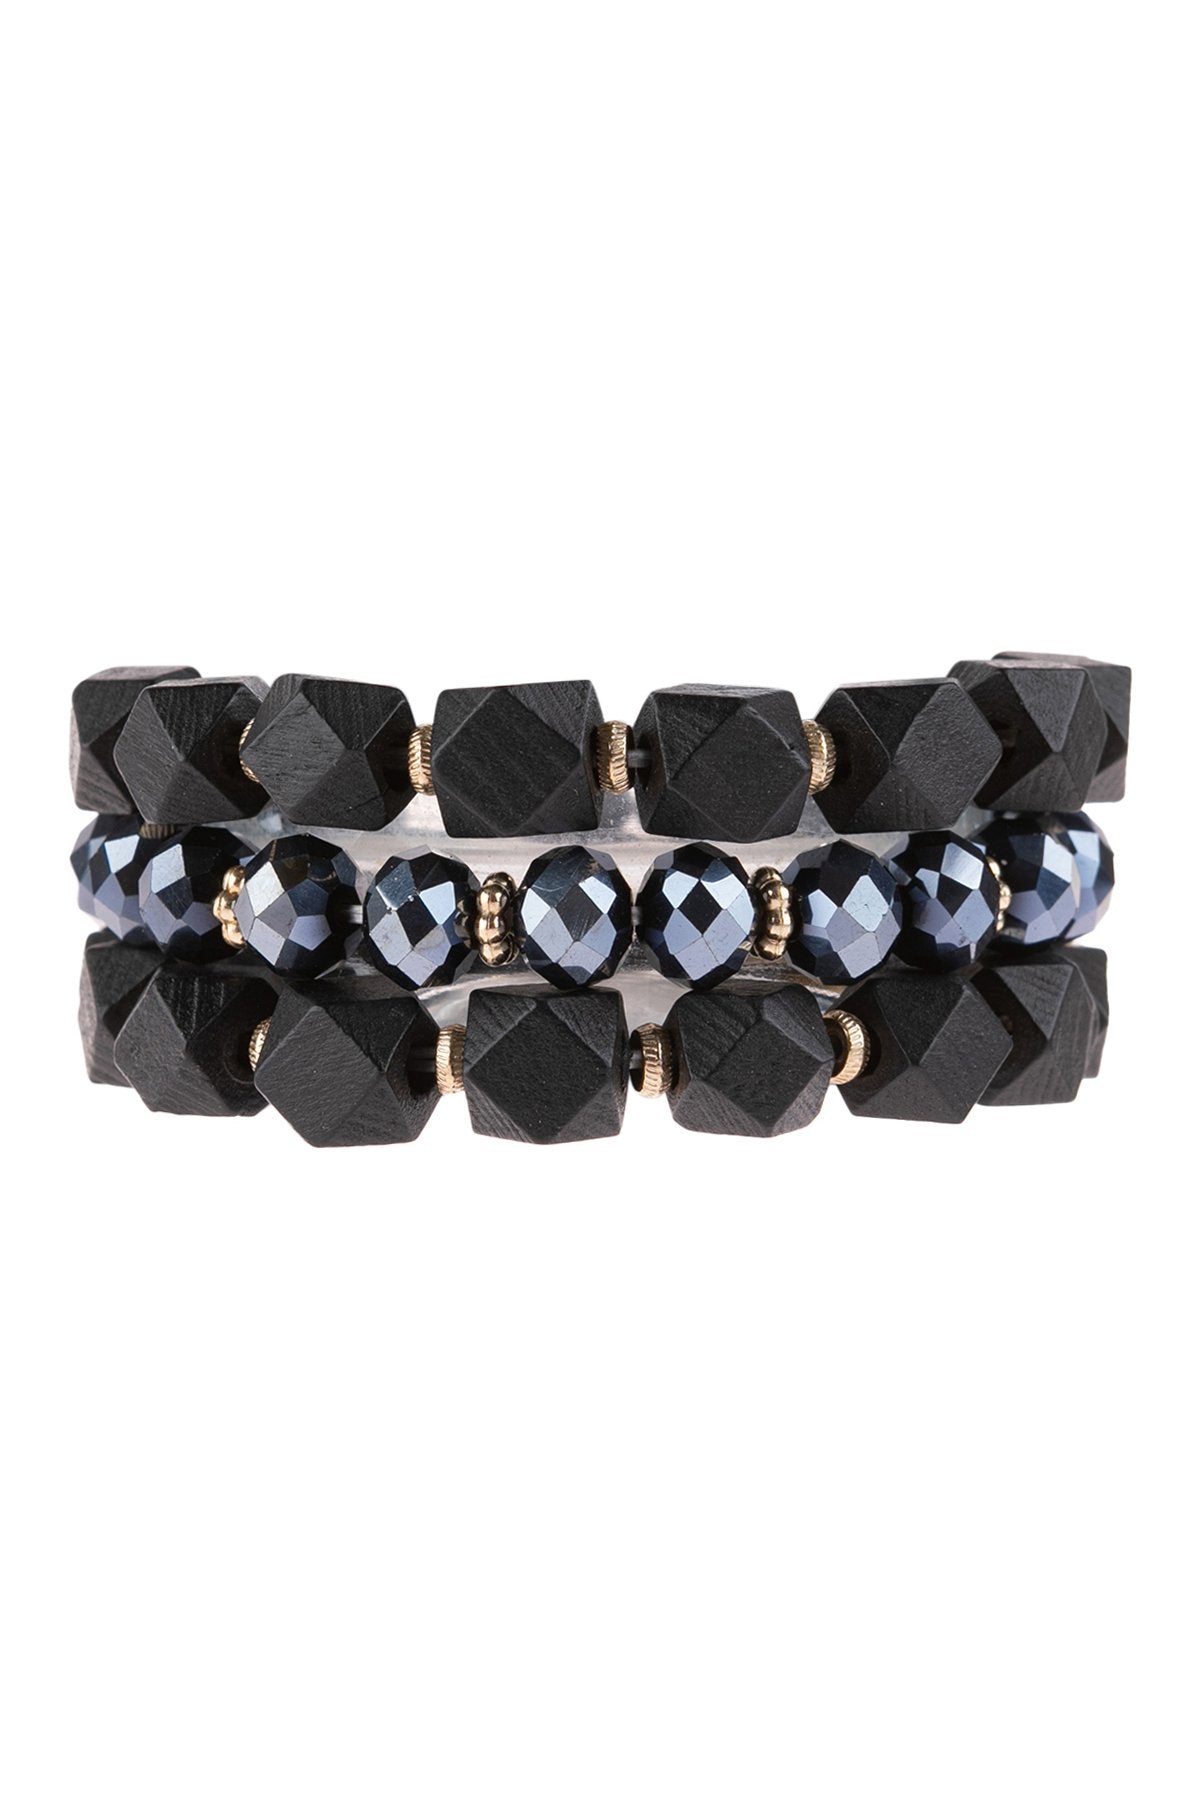 Hdb3226 - Three Lines Beads Bracelet